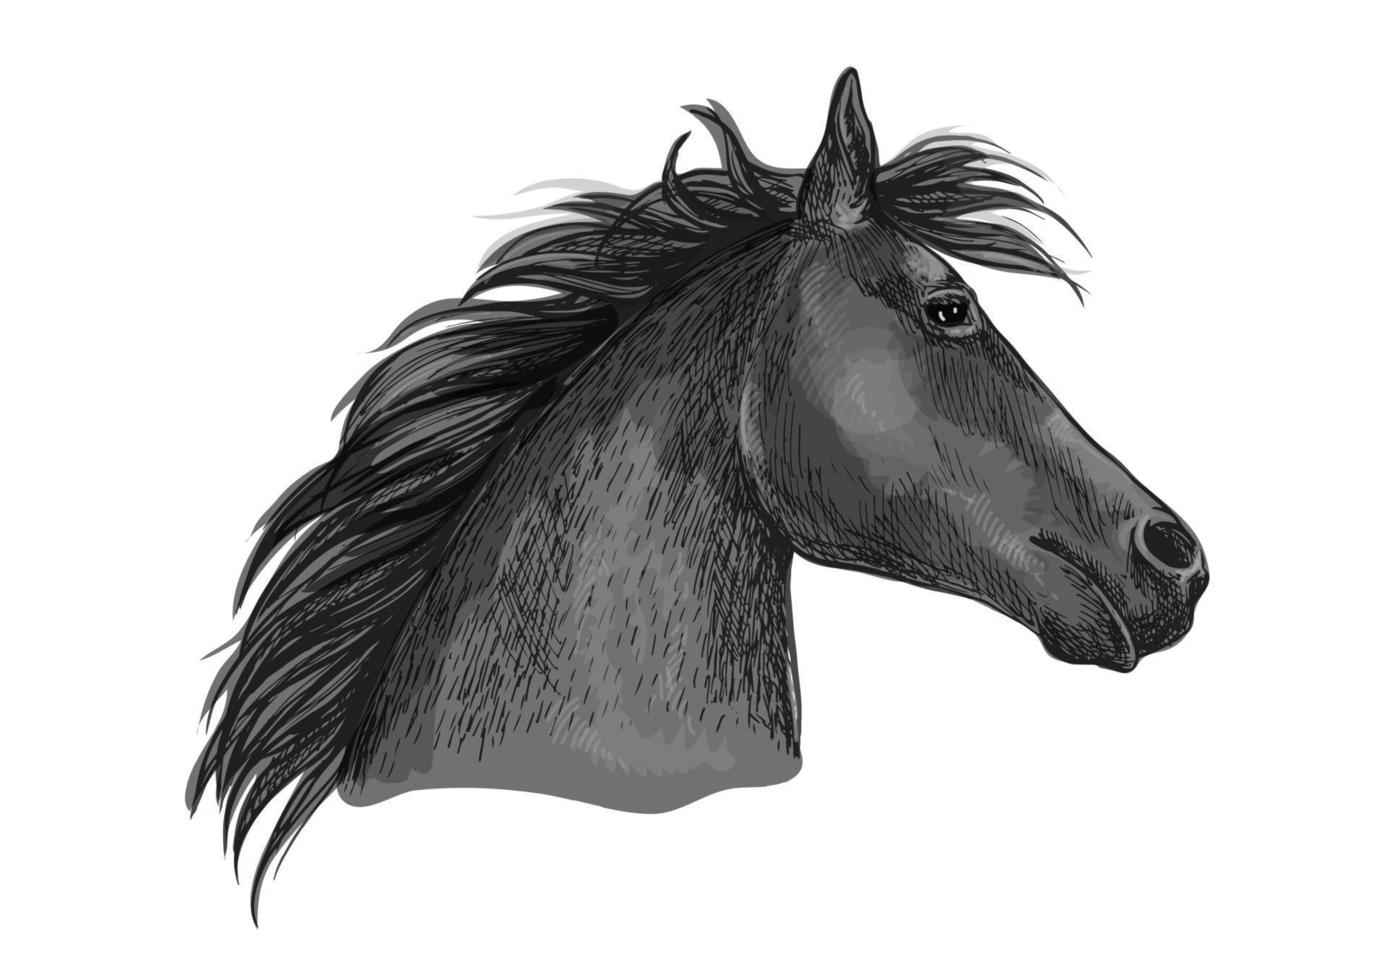 Black racehorse sketch with horse head vector